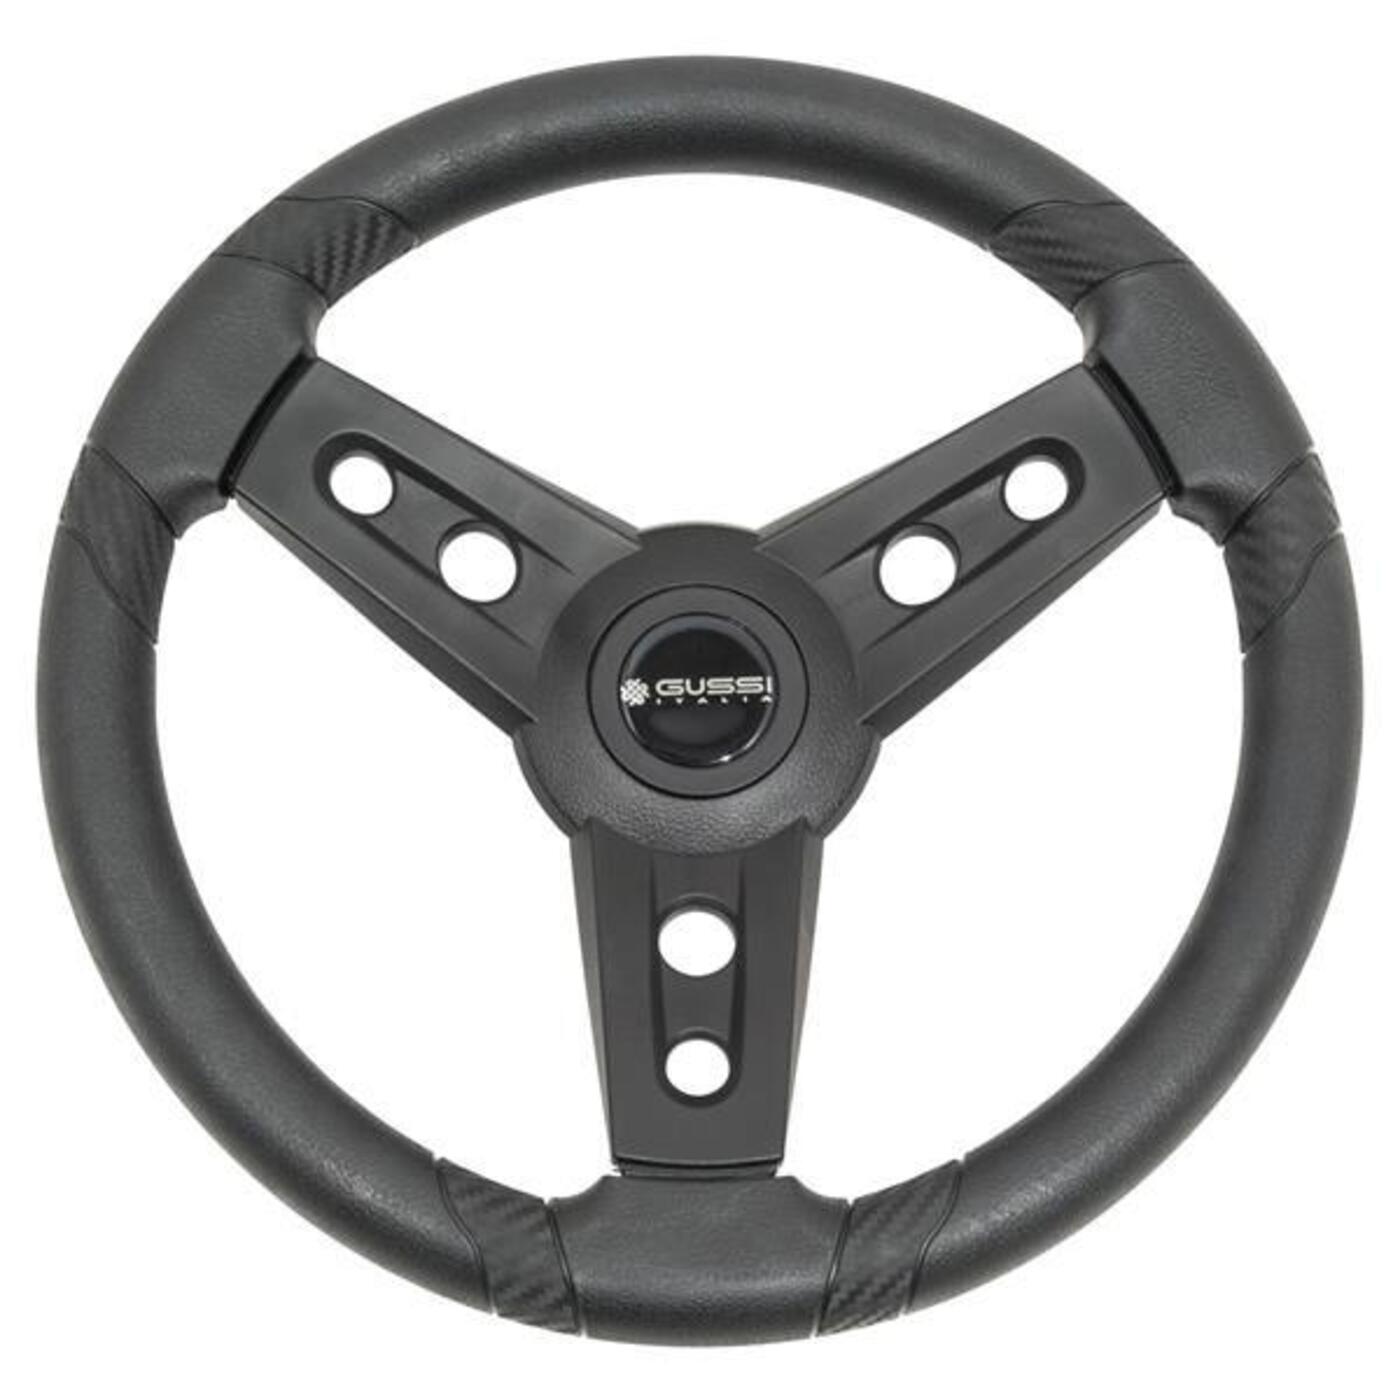 Gussi Italia Lugana Black Steering Wheel For All Club Car Precedent Models 06-122